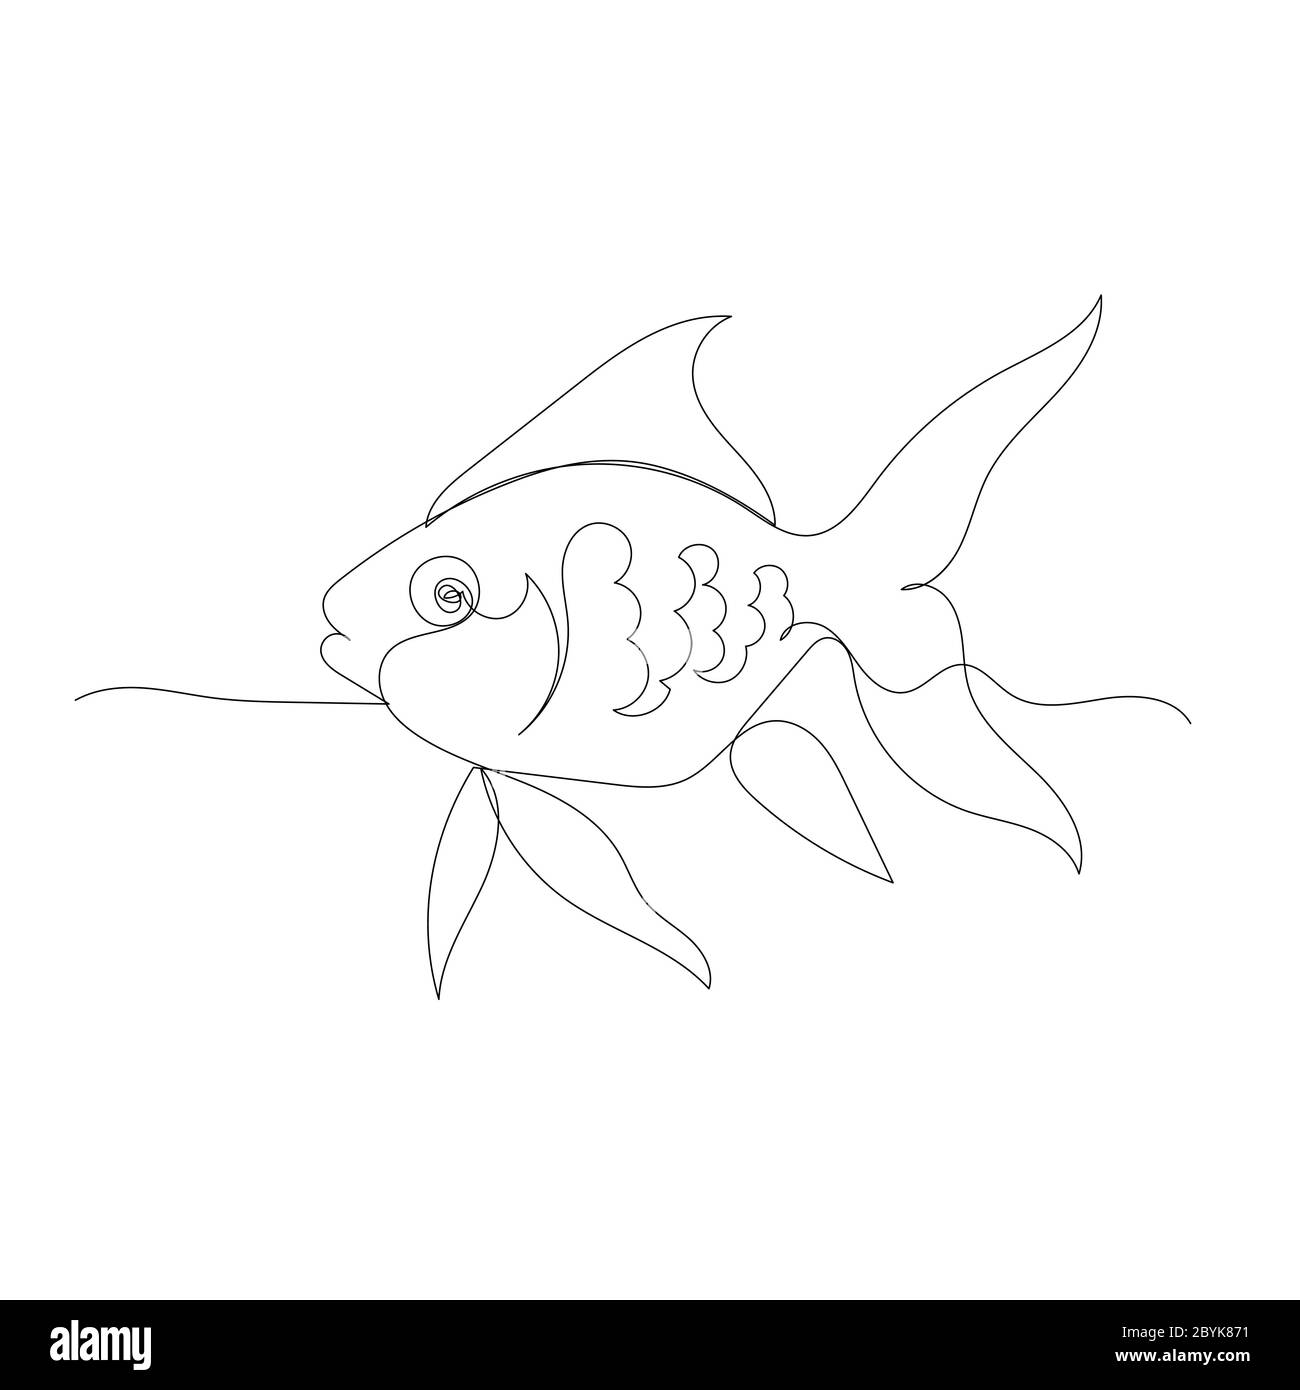 Hand Drawn Line Art Of Koi Carp, Carp Fish, Vector Royalty Free SVG,  Cliparts, Vectors, and Stock Illustration. Image 52096084.